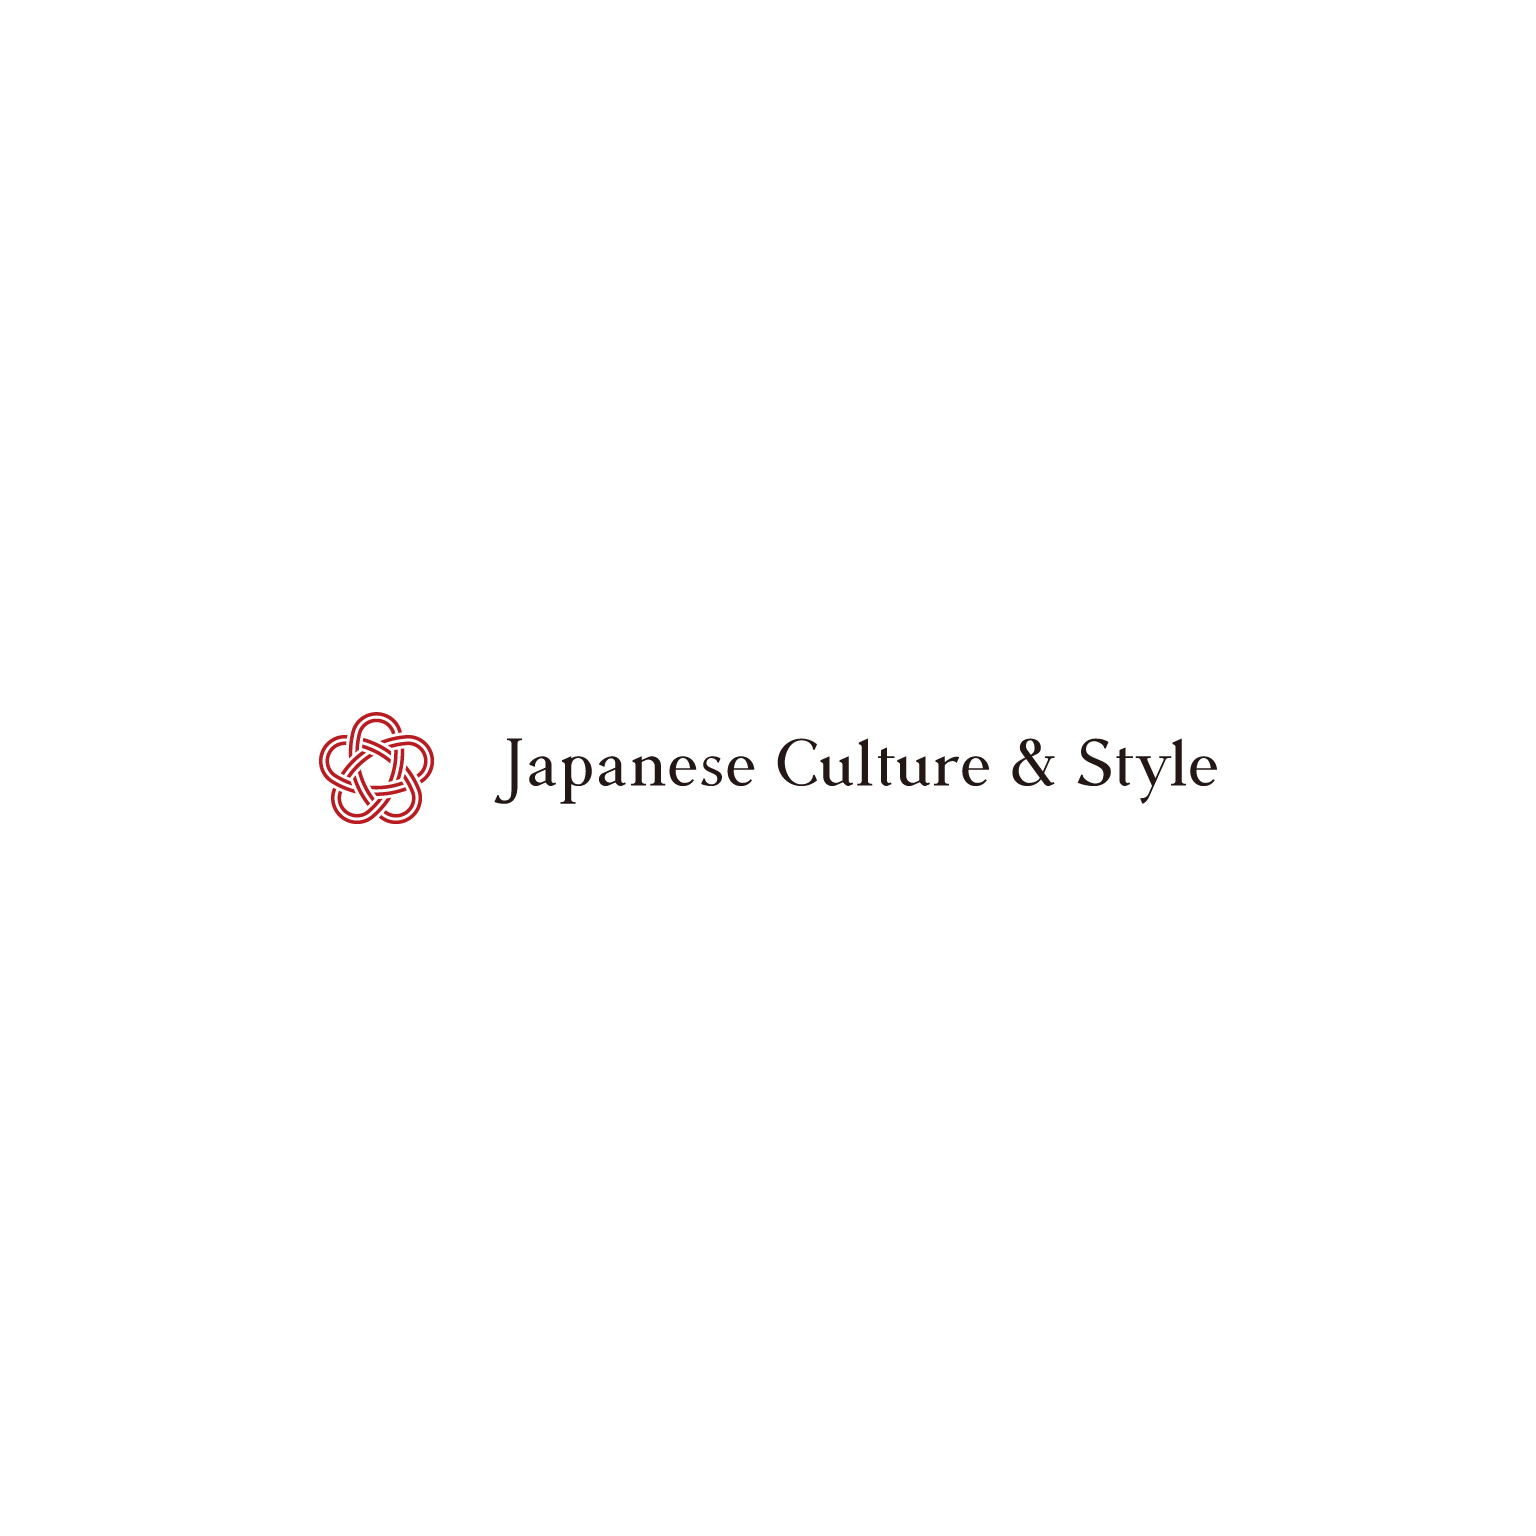 Japanese Culture & Style Logo